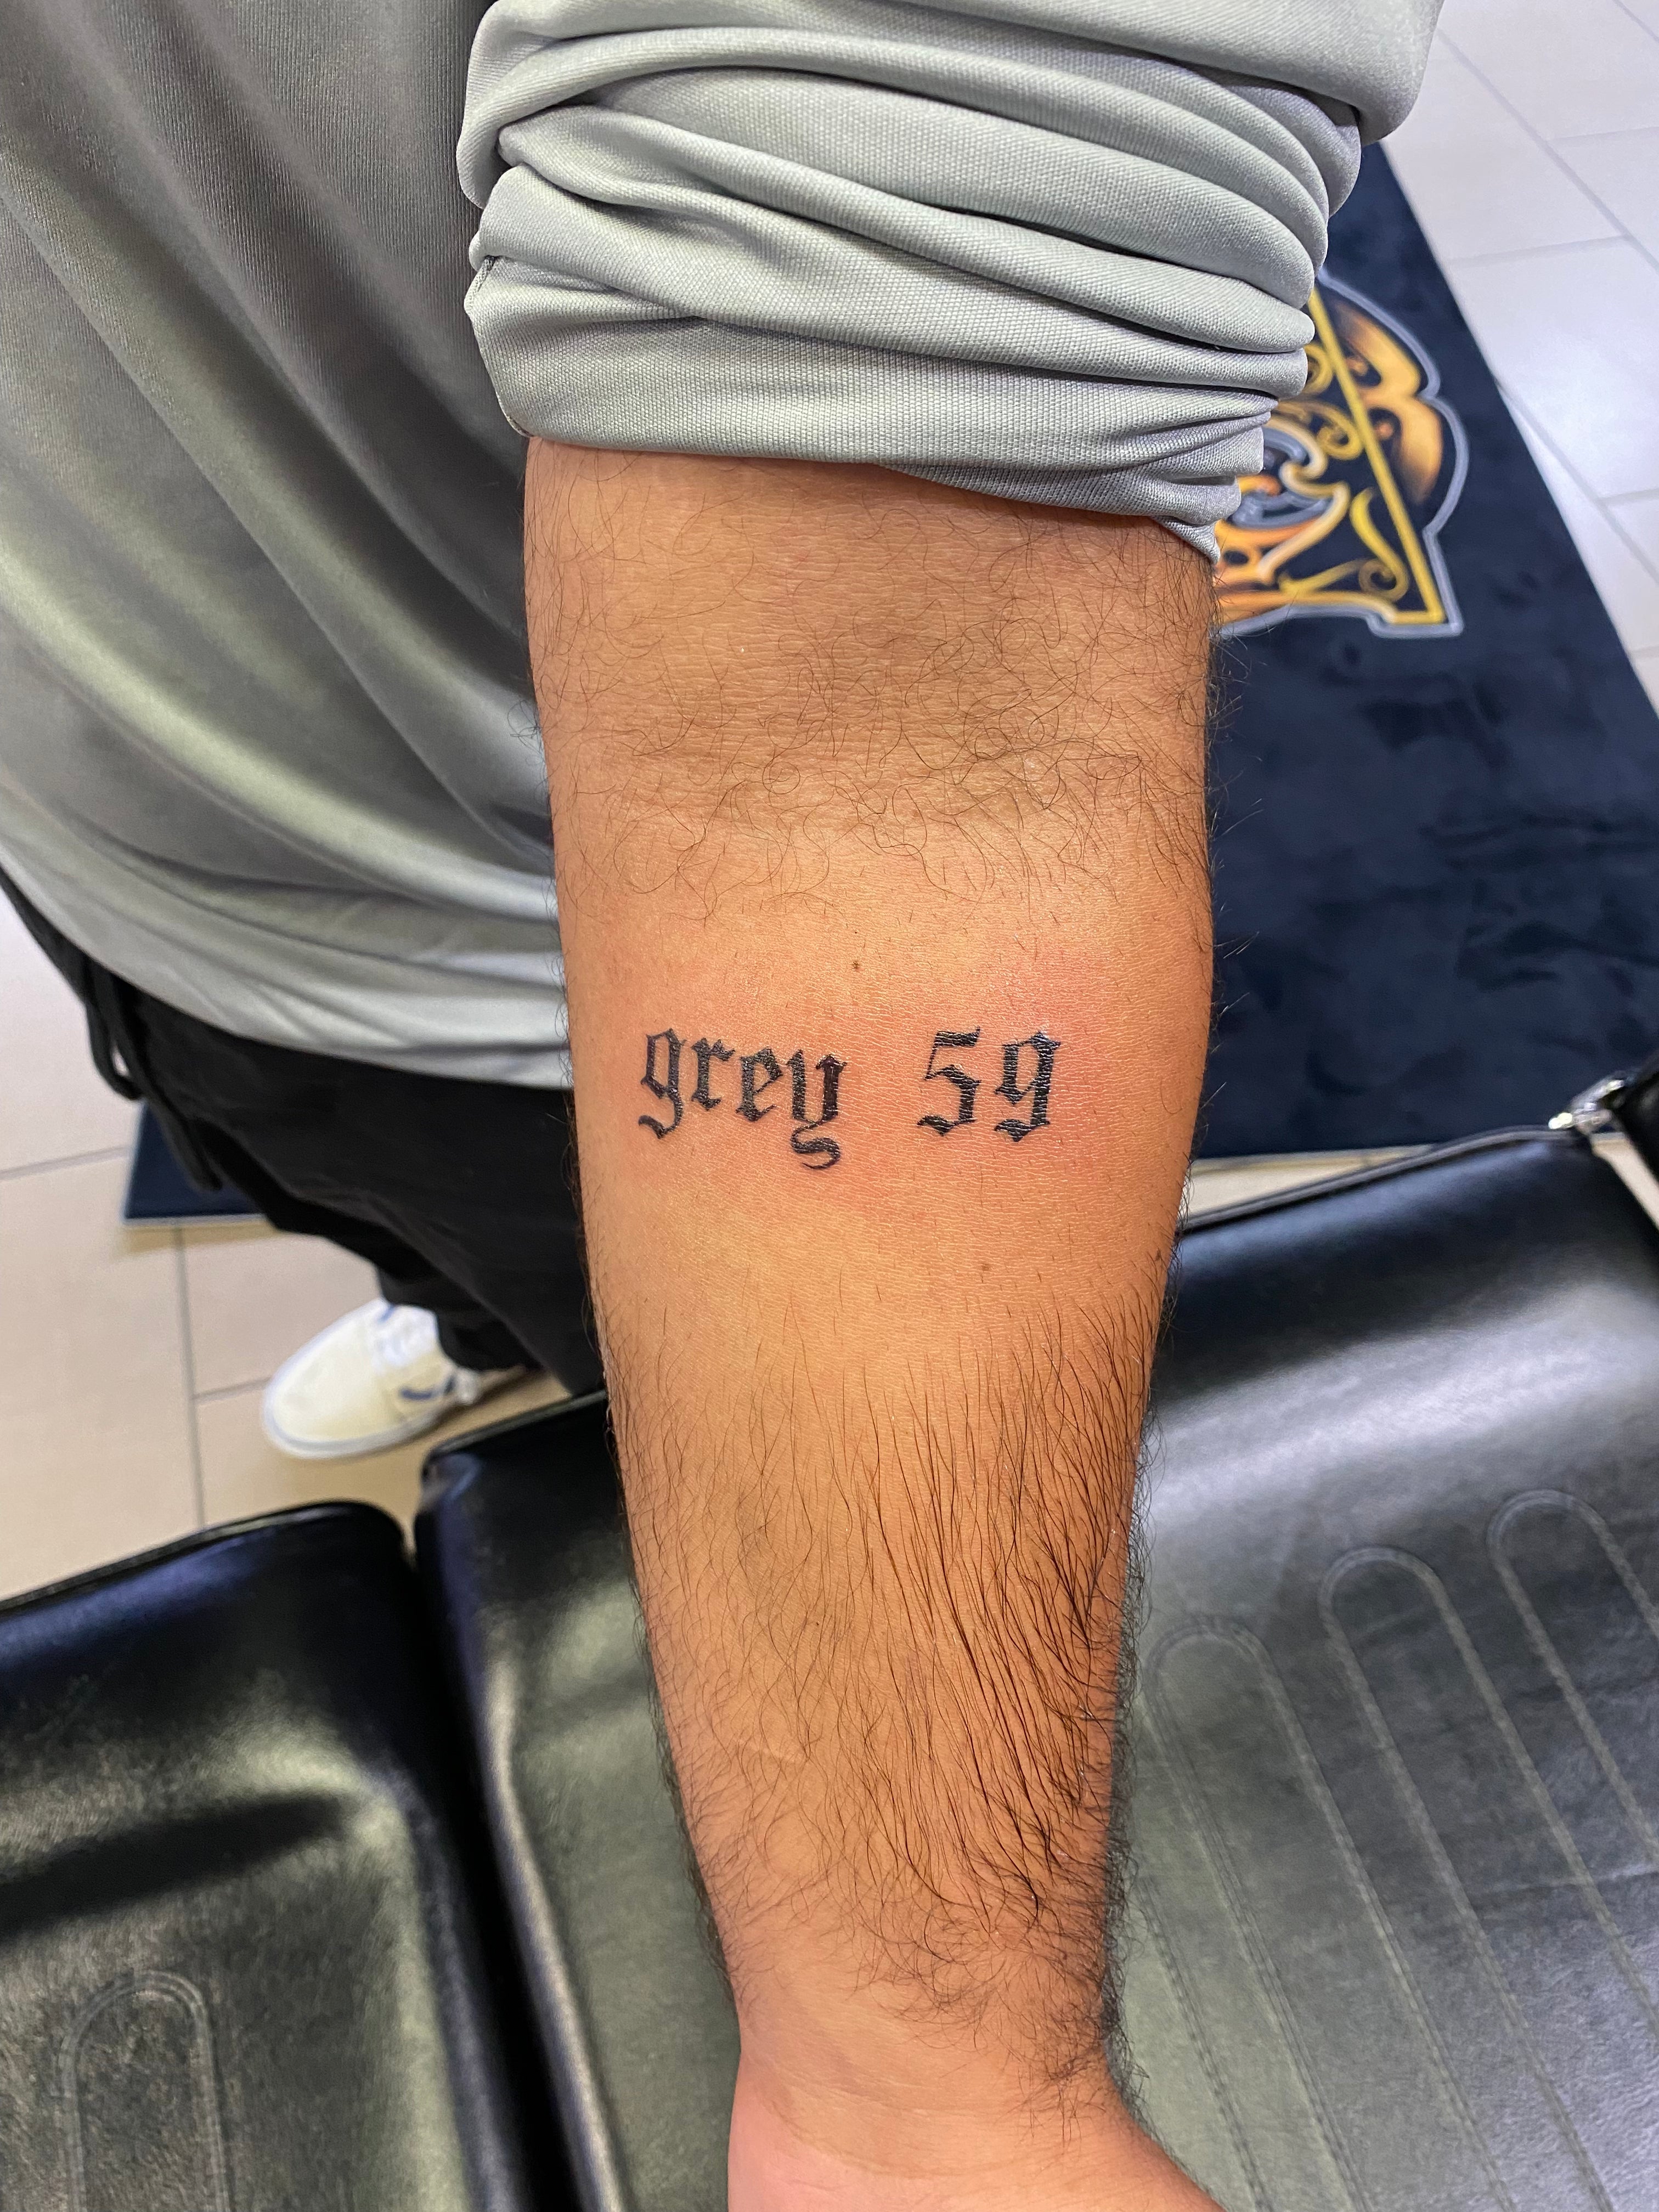 GRAYGREY Tattoo I got 2 days ago still healing  rG59